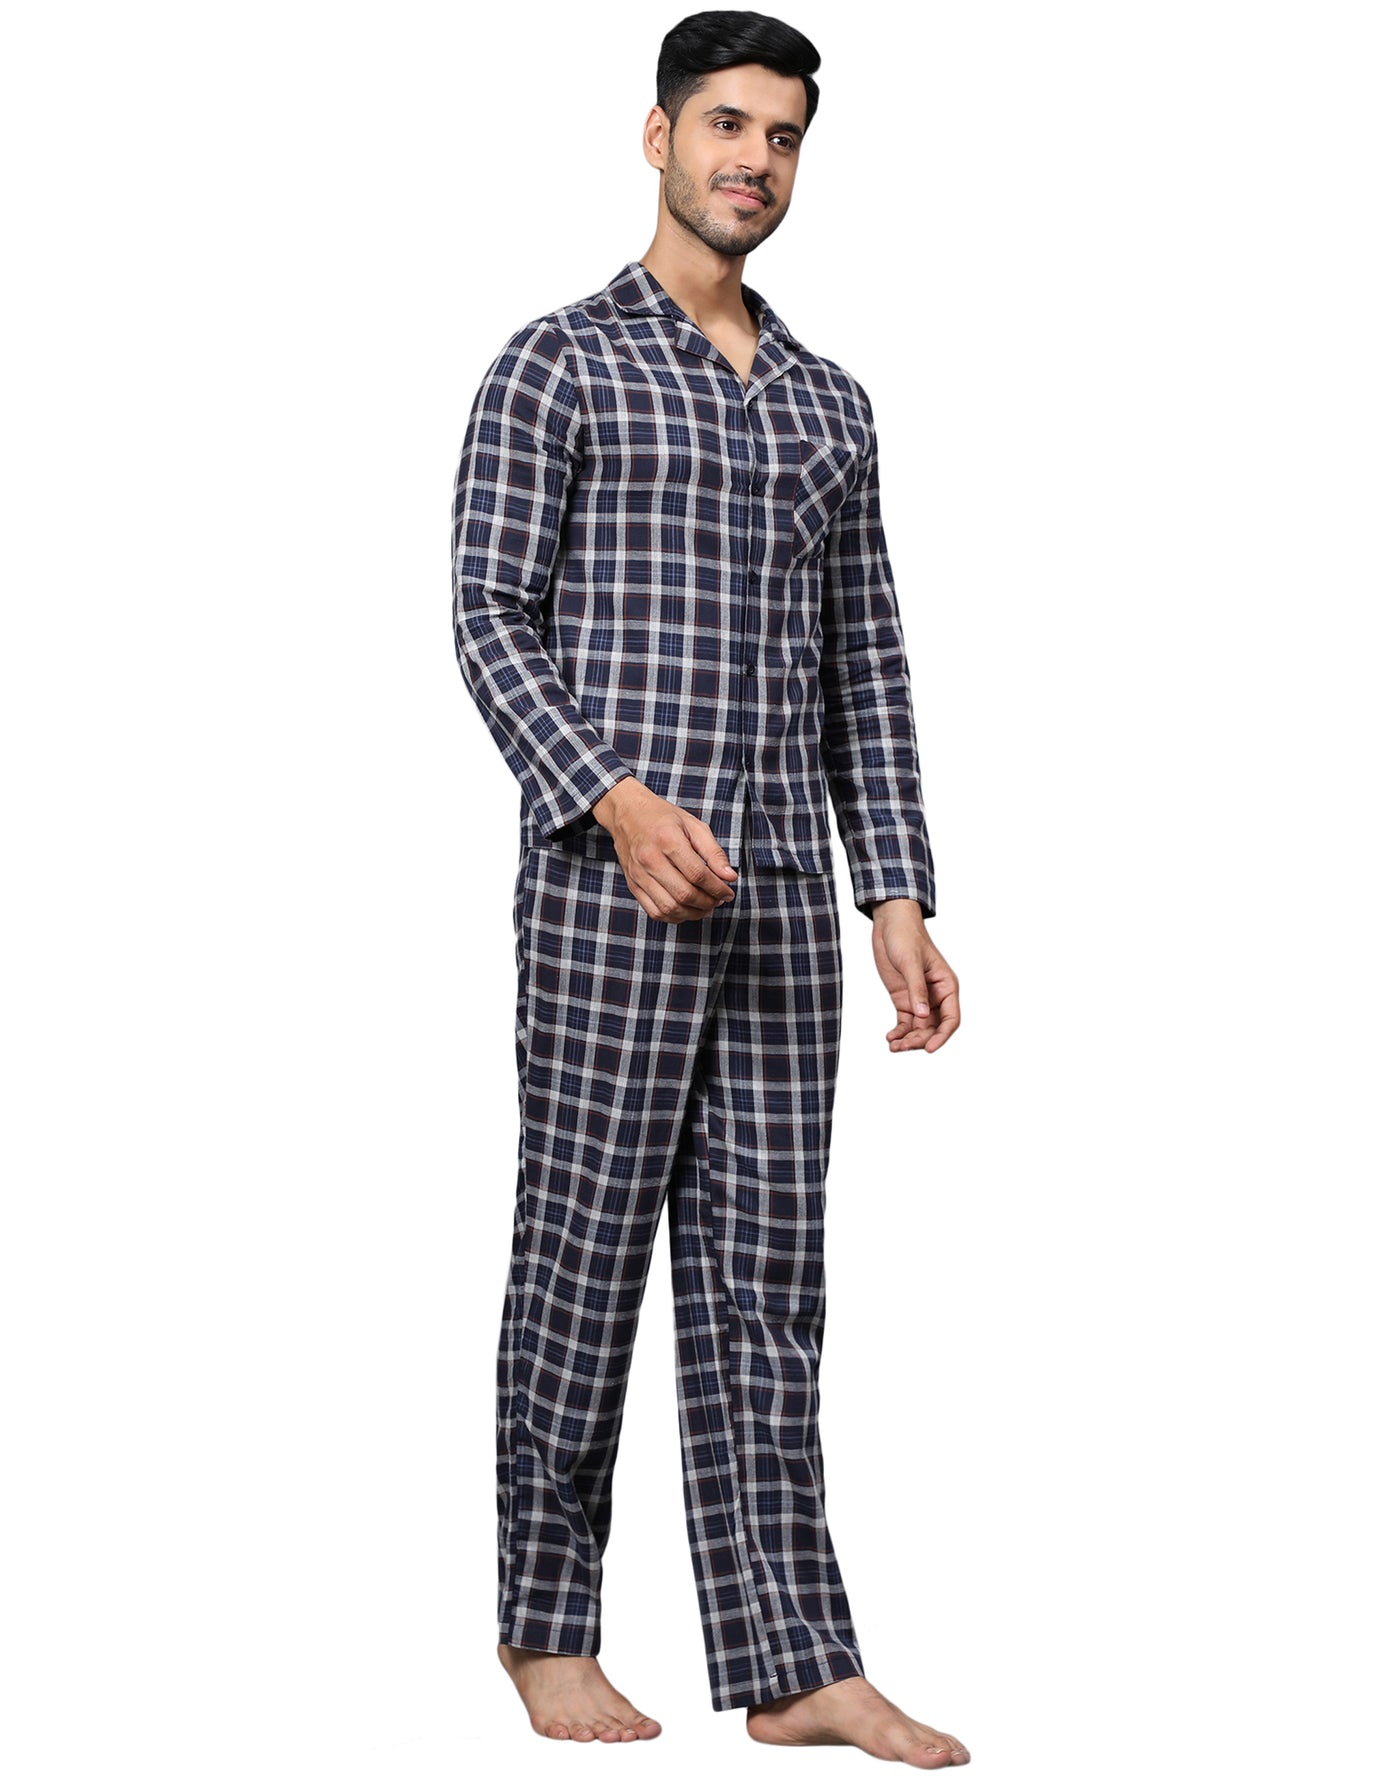 Pyjama Set for Men-Navy & White Checks